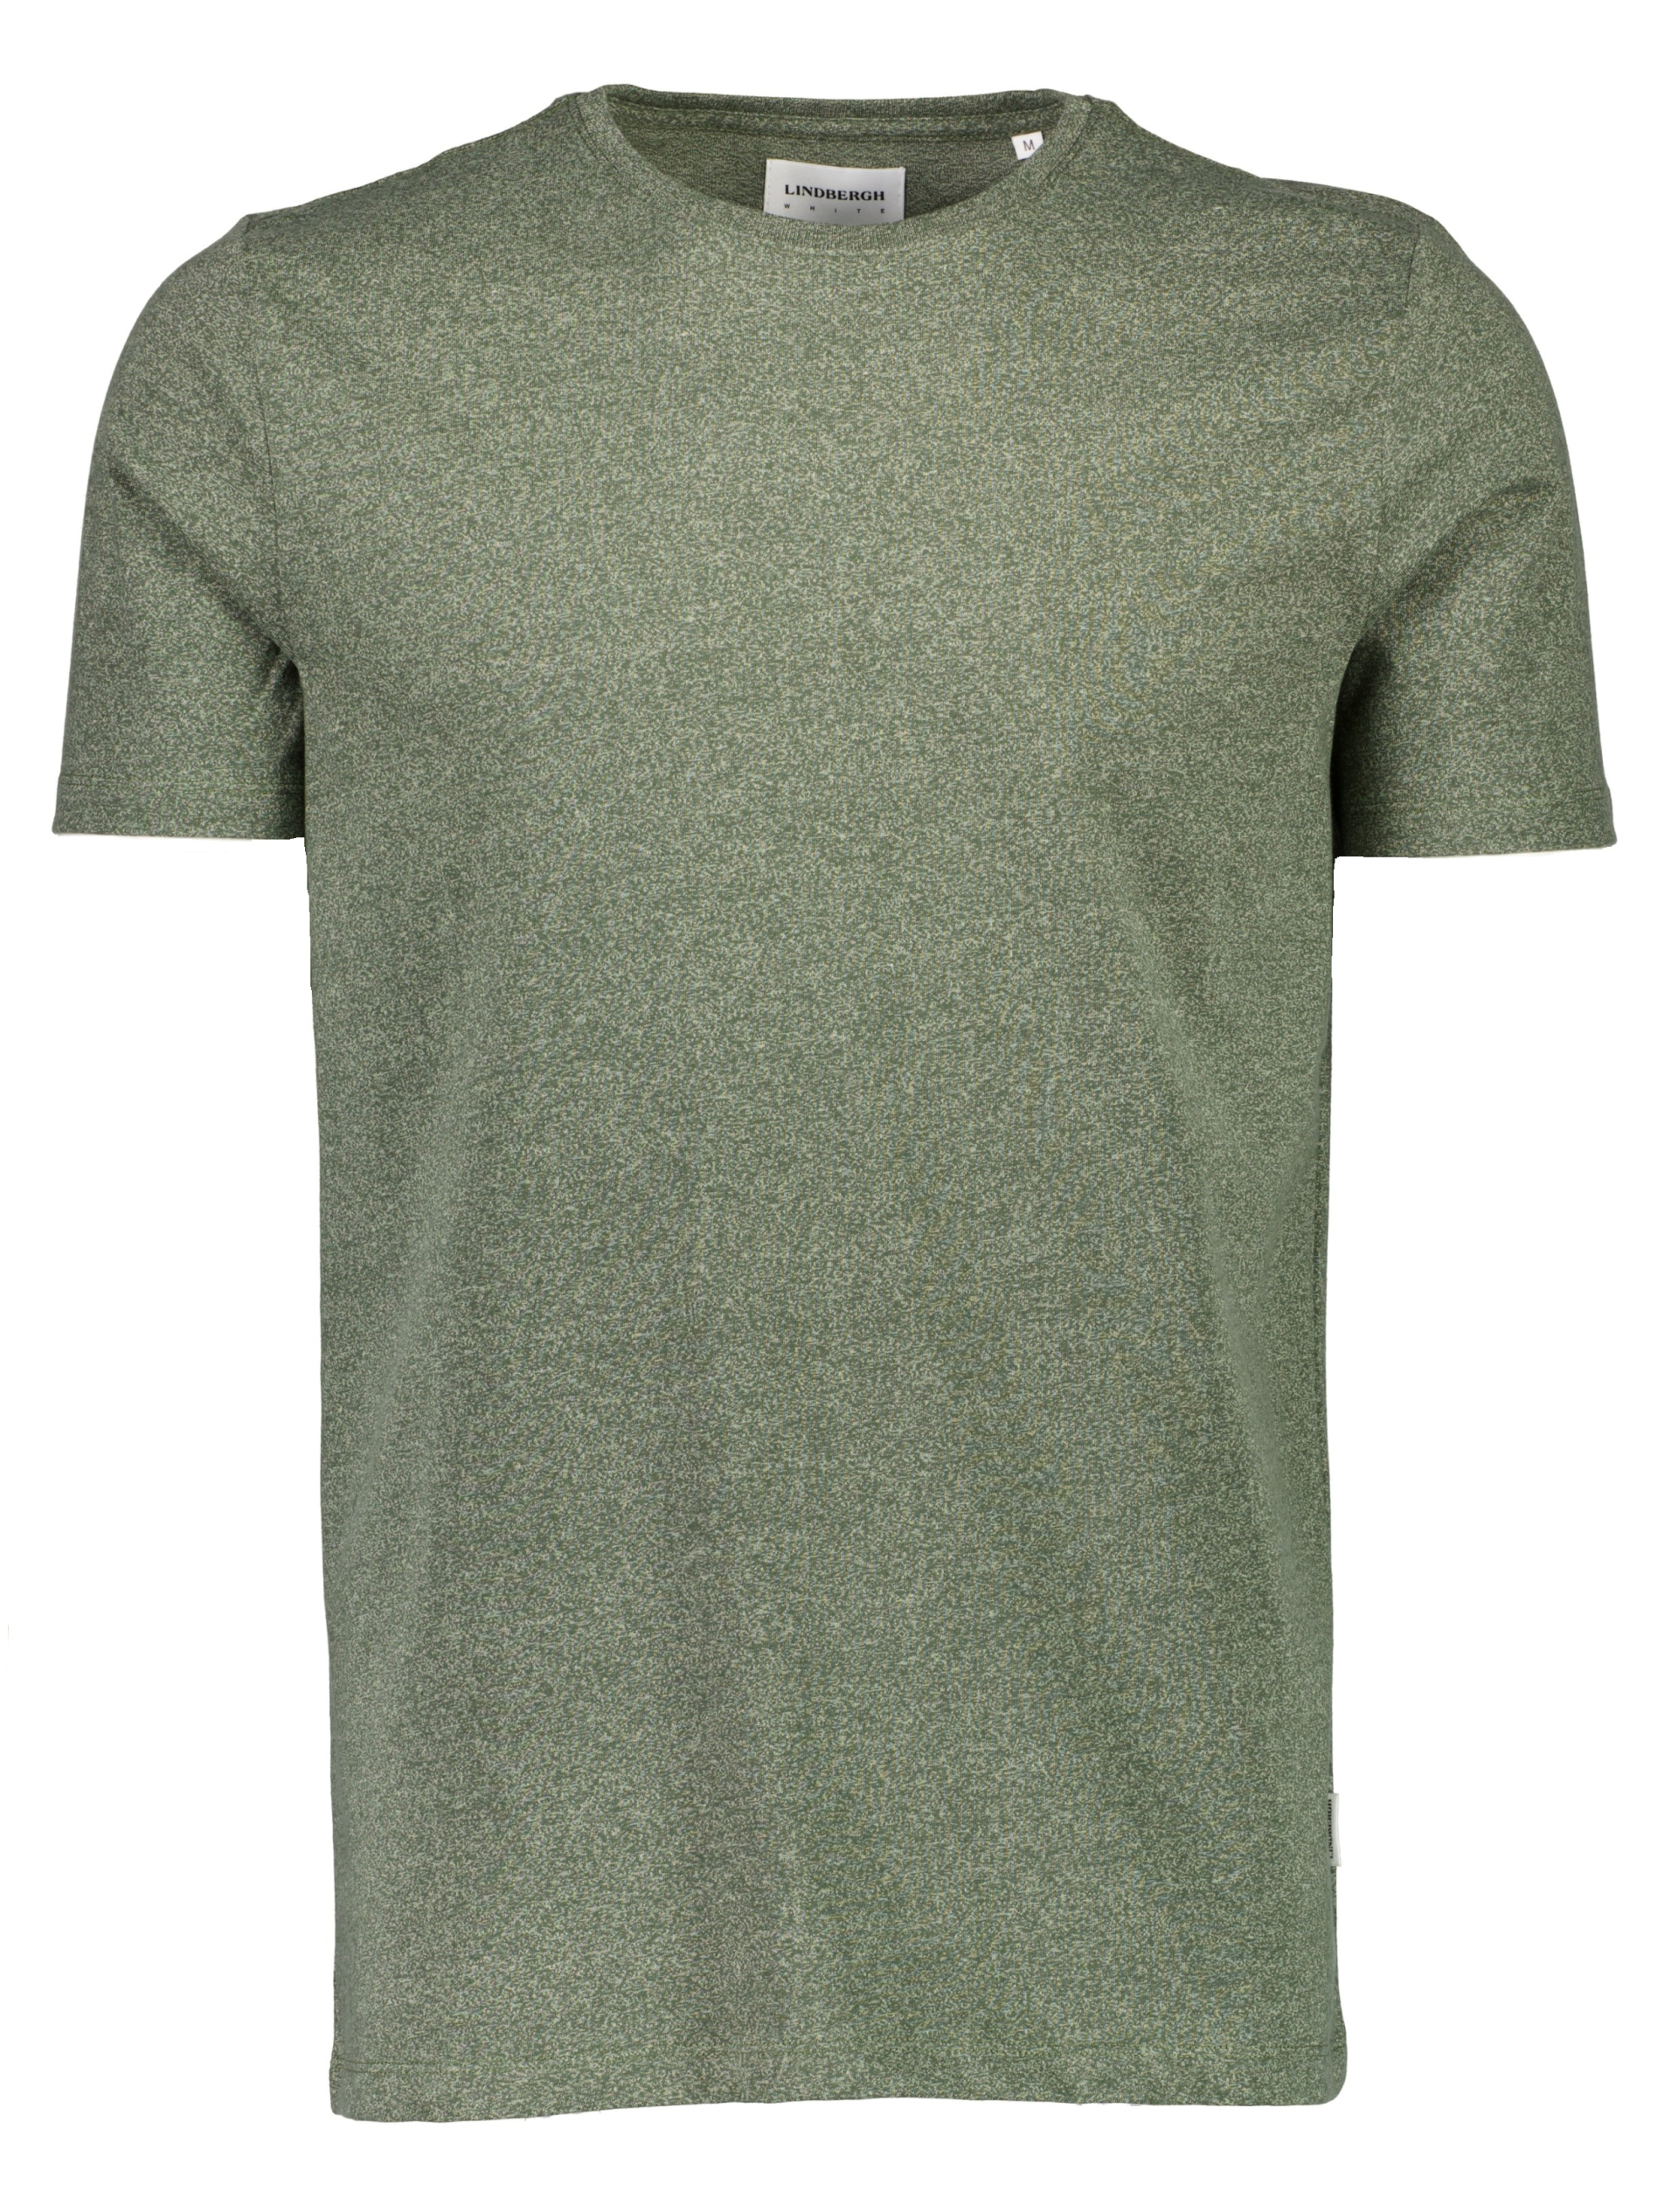 Lindbergh T-shirt groen / dusty army mix